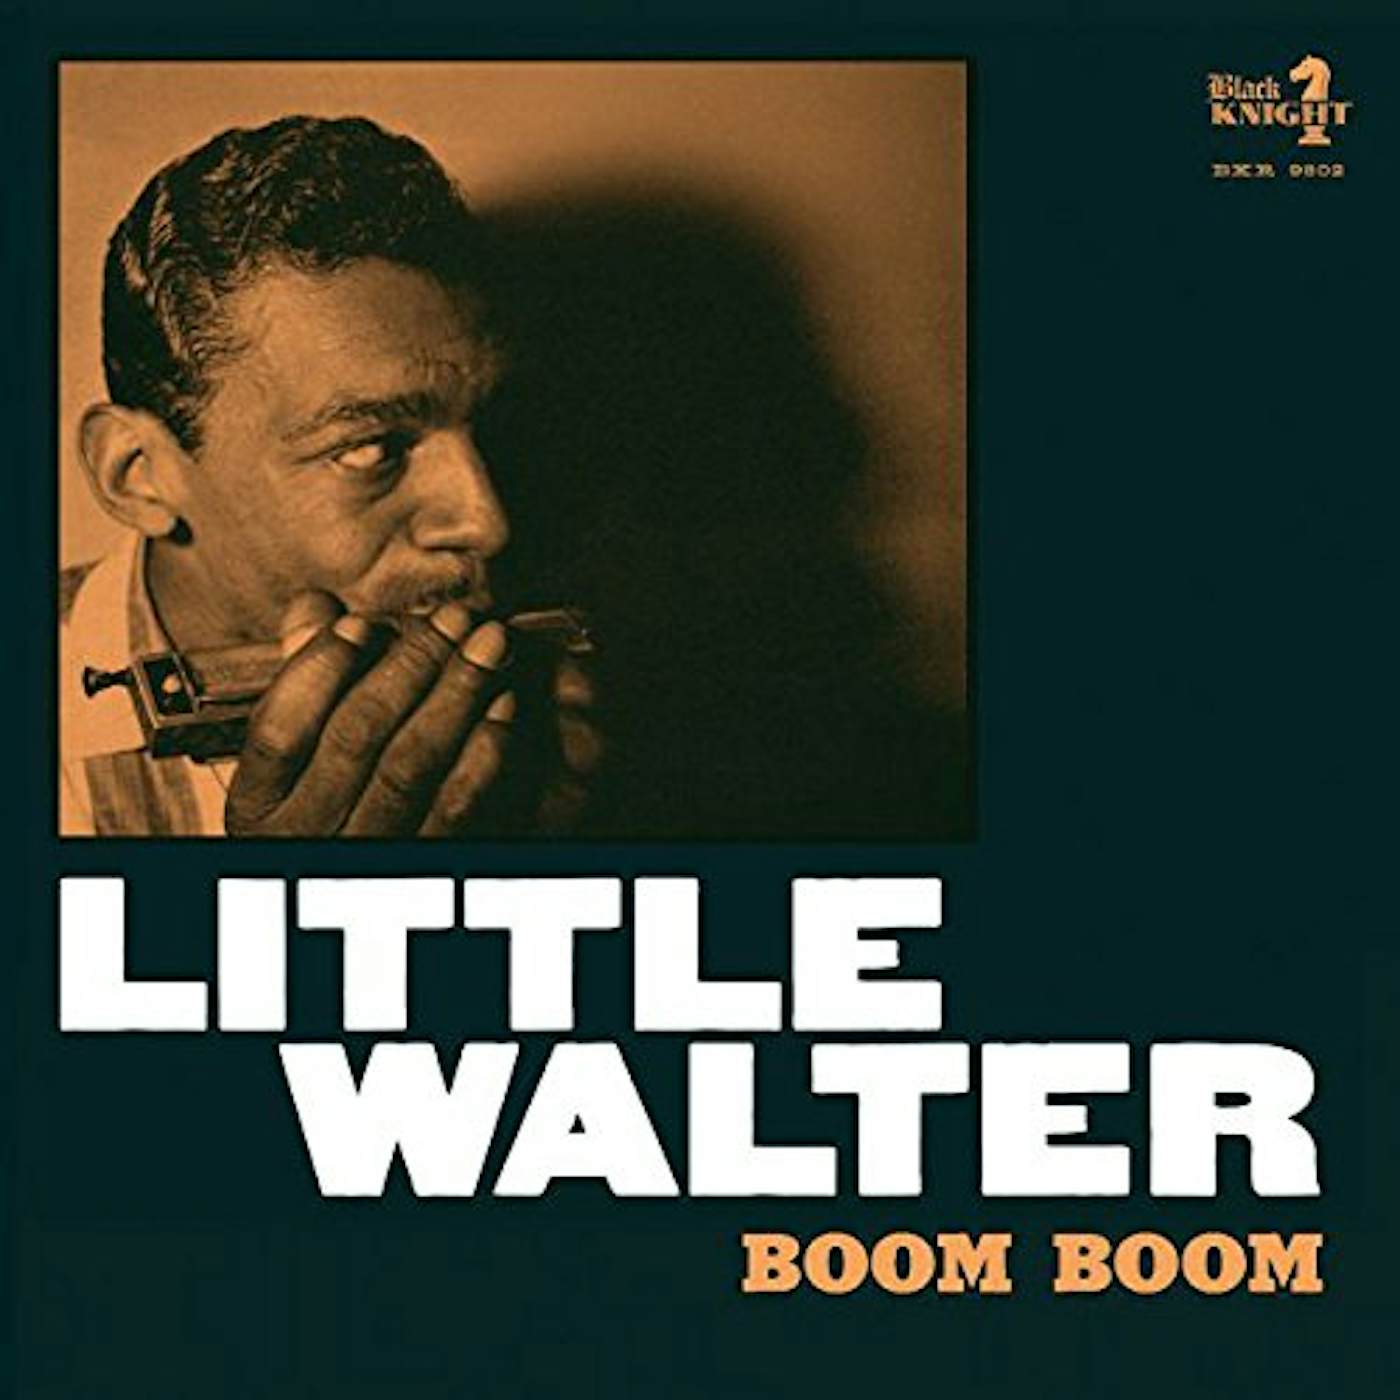 Little Walter BOOM BOOM CD